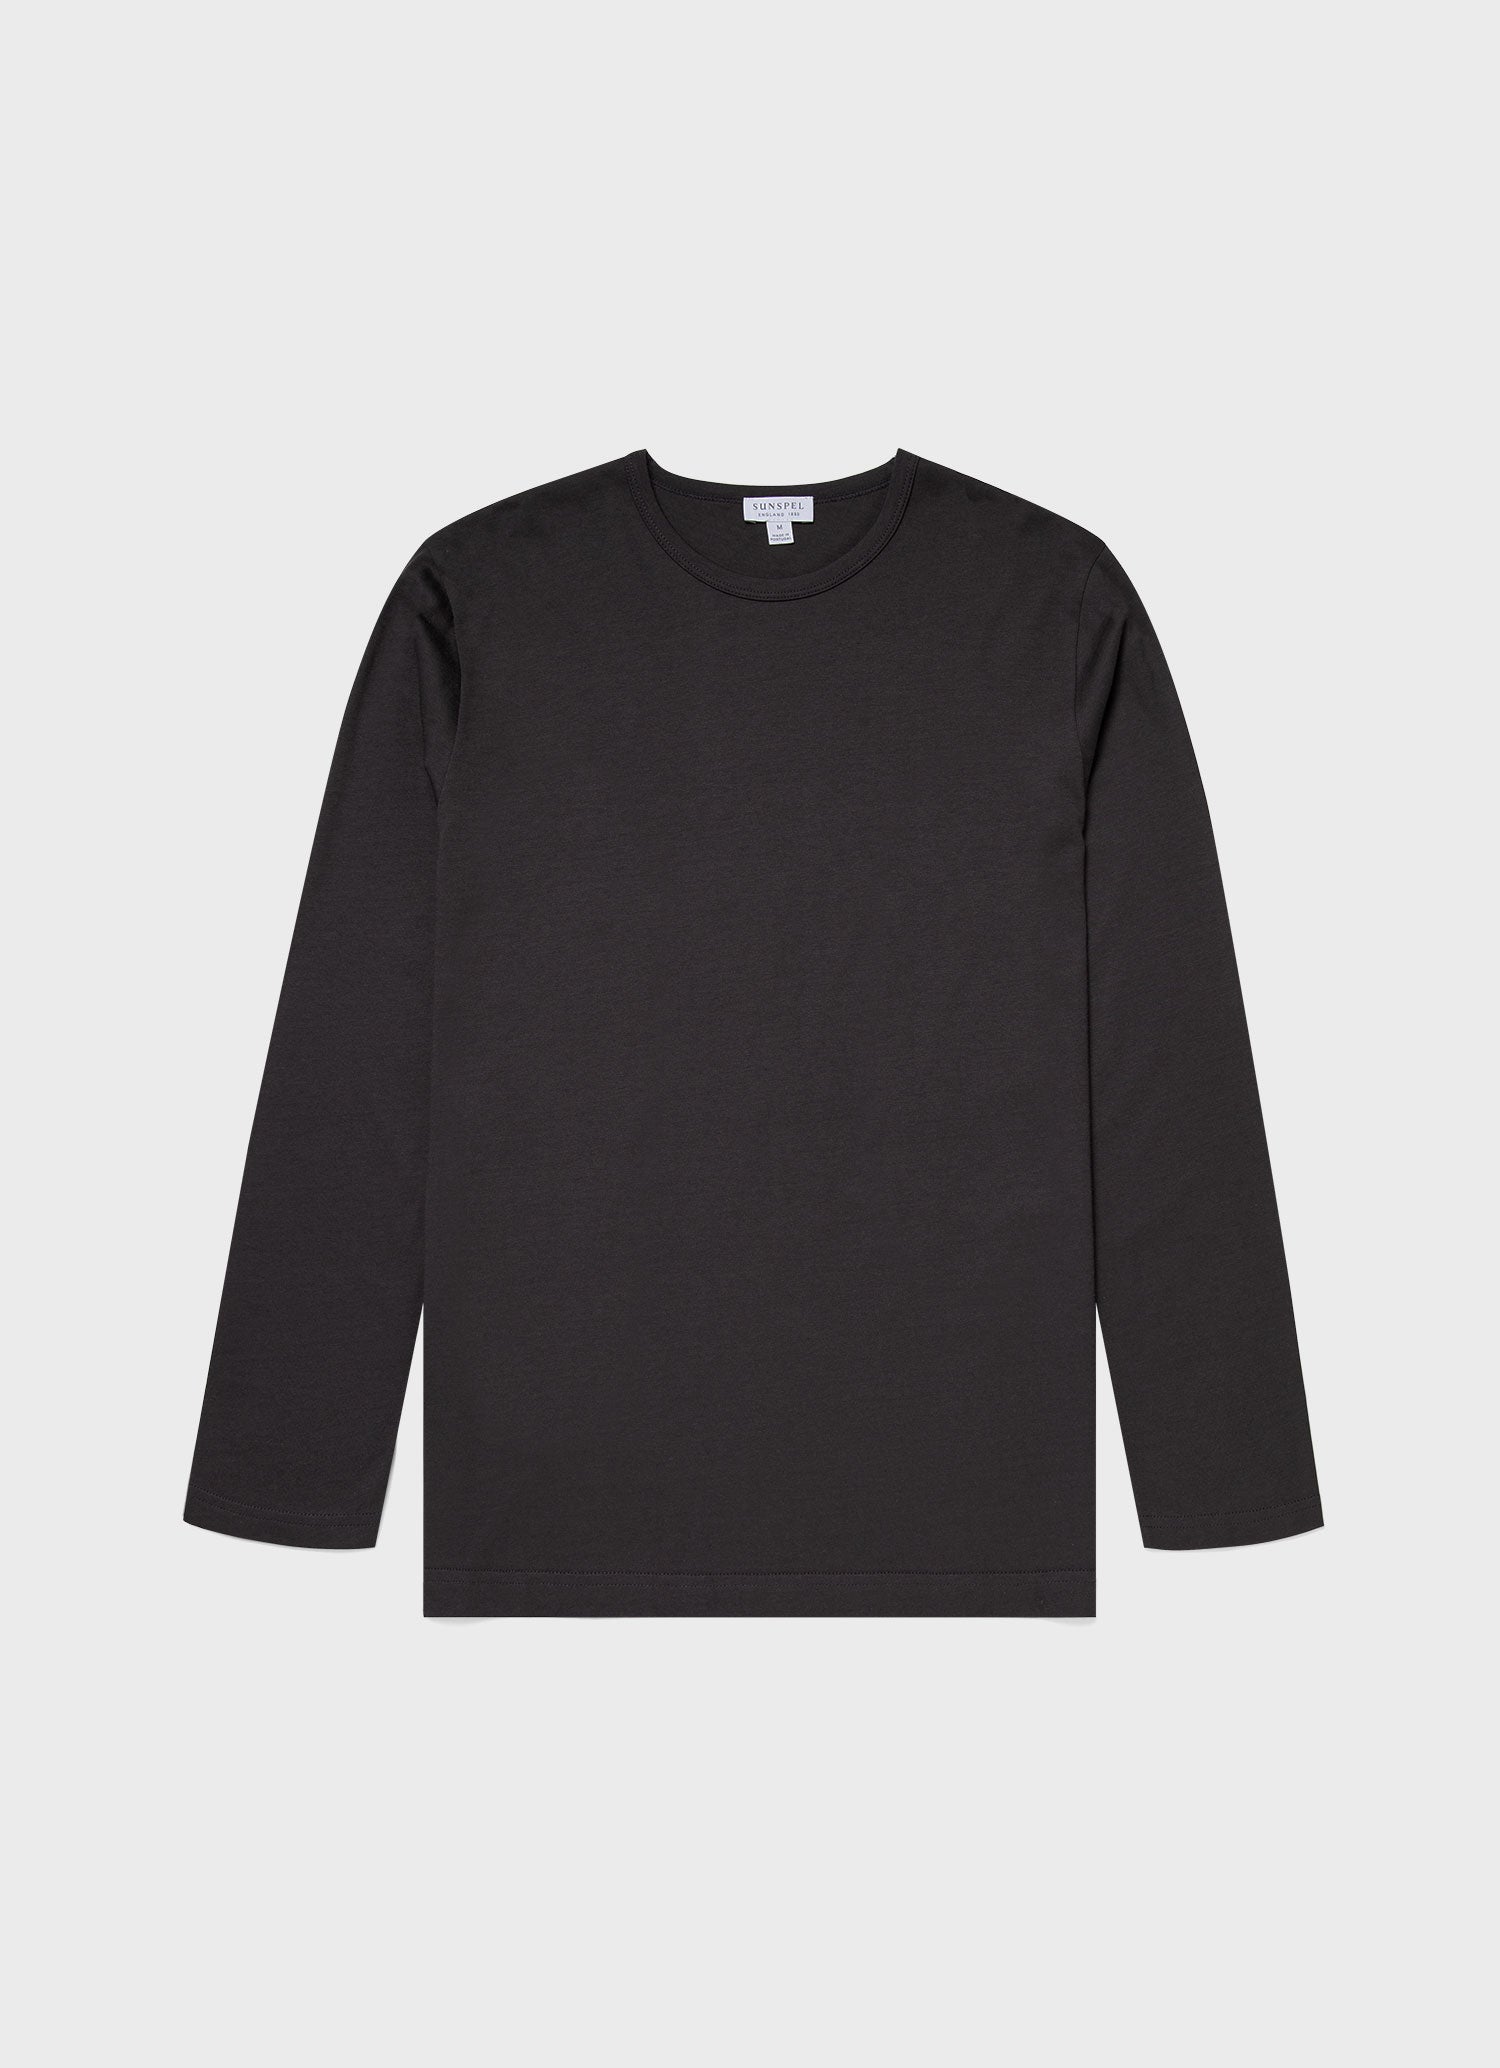 Men's Long Sleeve Cotton Modal Lounge T-shirt in Charcoal